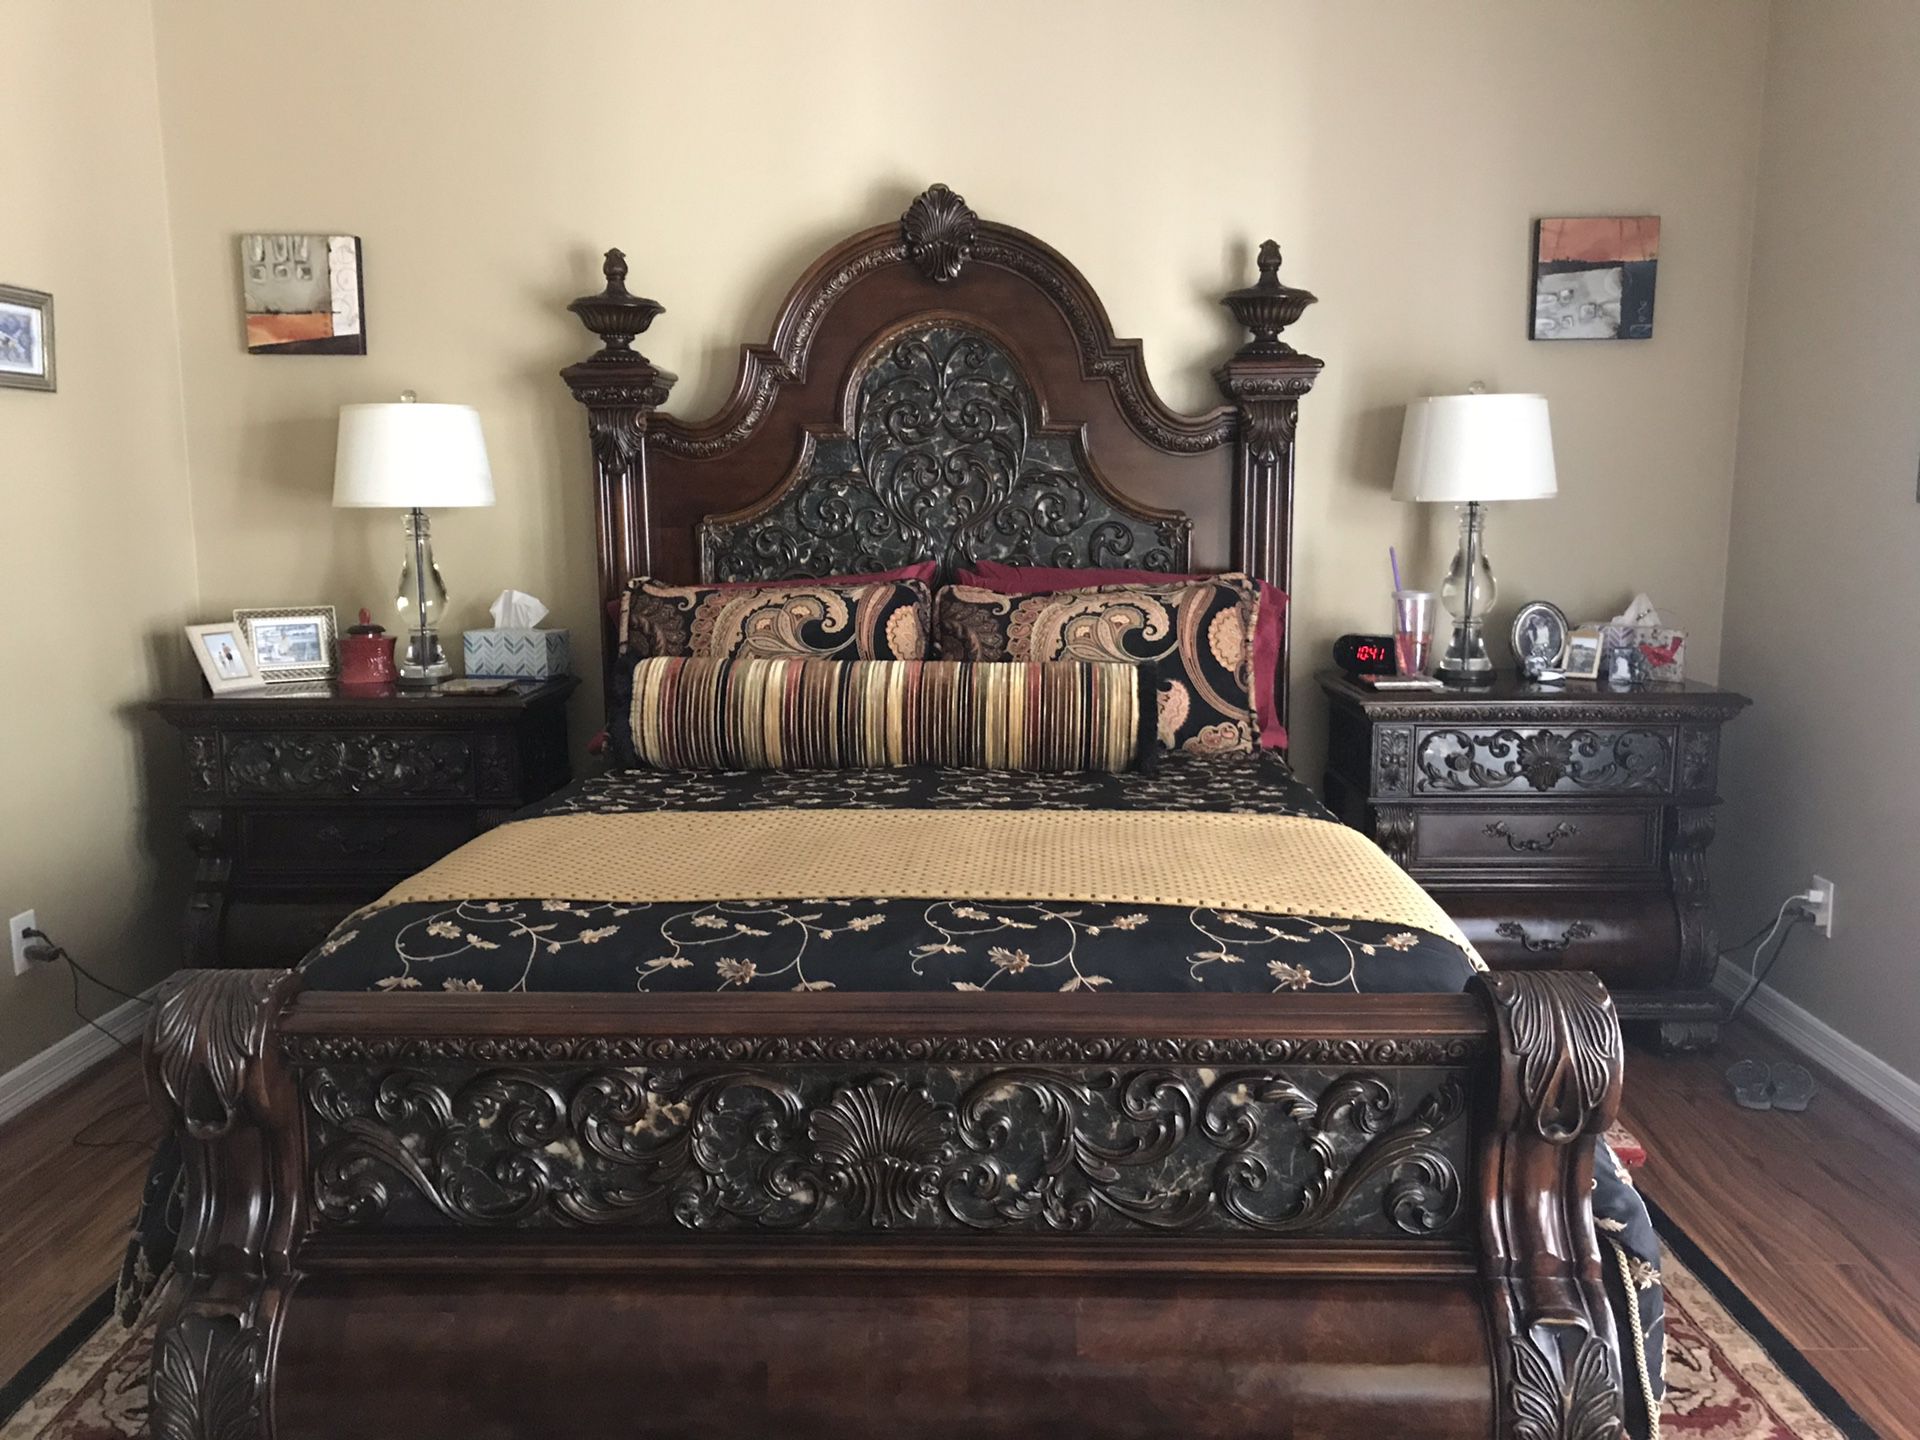 Pulaski Bedroom Suite - excellent condition